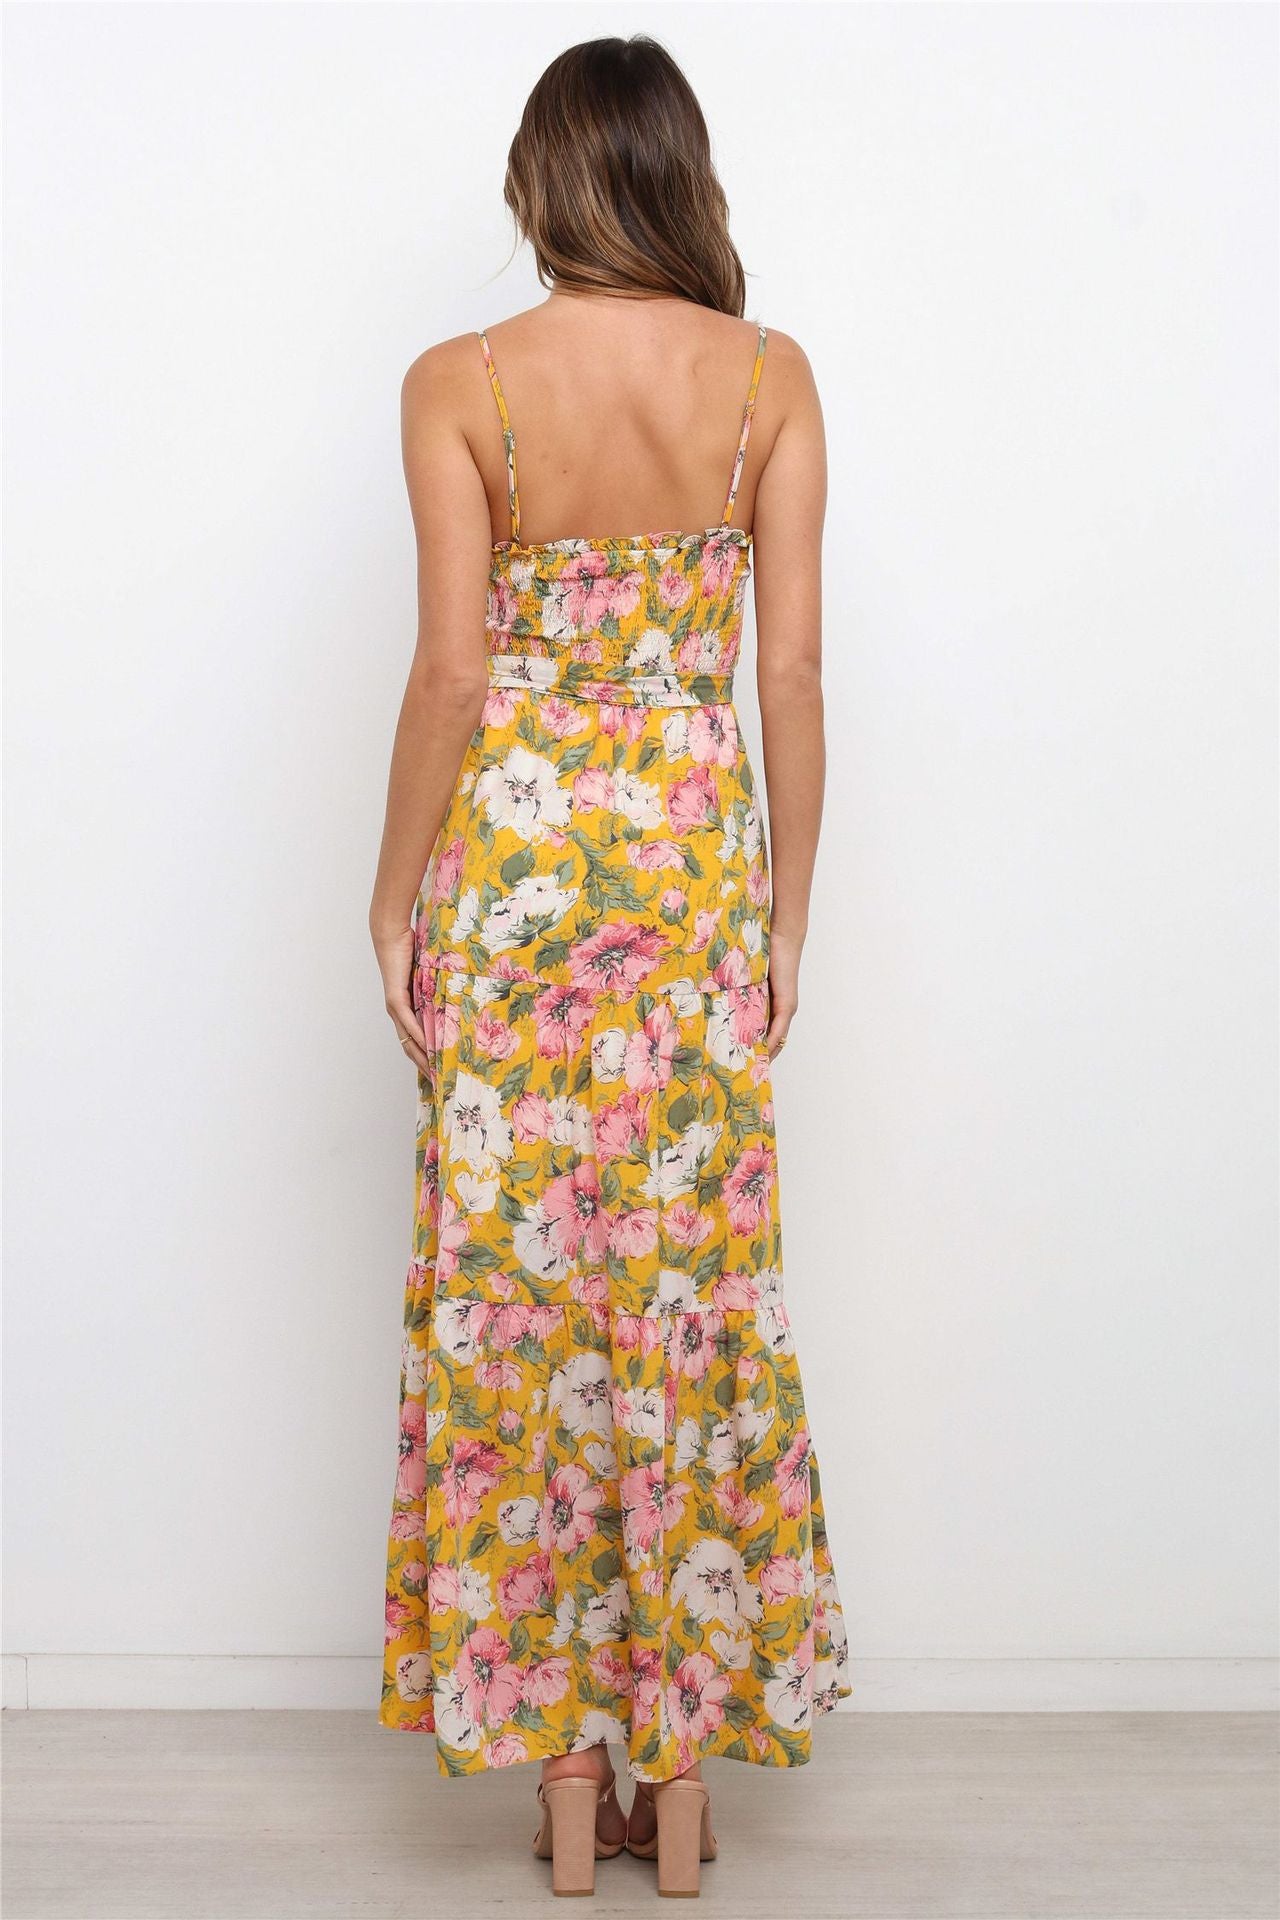 Yellow Floral Slip Maxi Dress